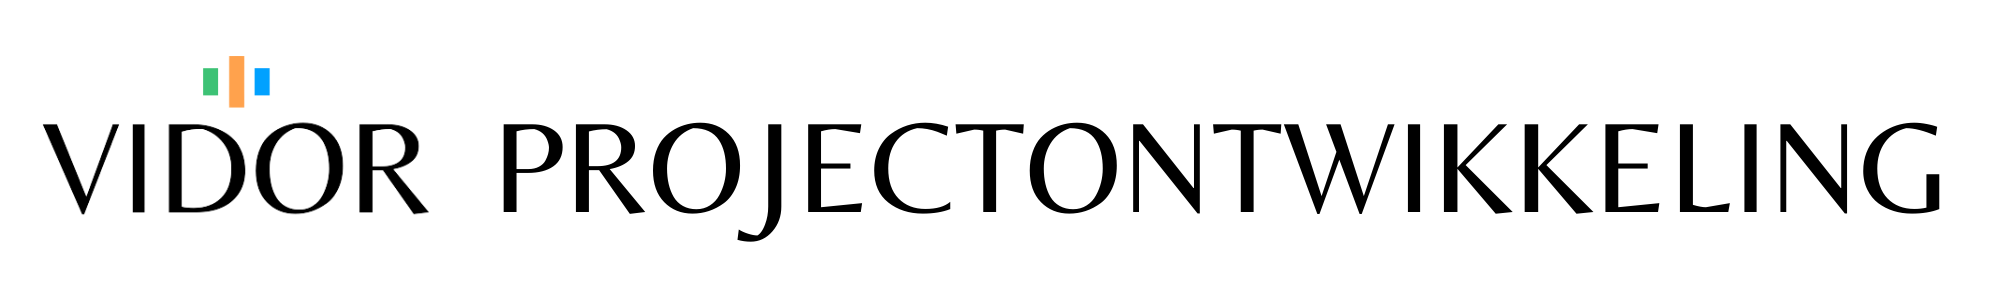 Vidor Projectontwikkeling logo